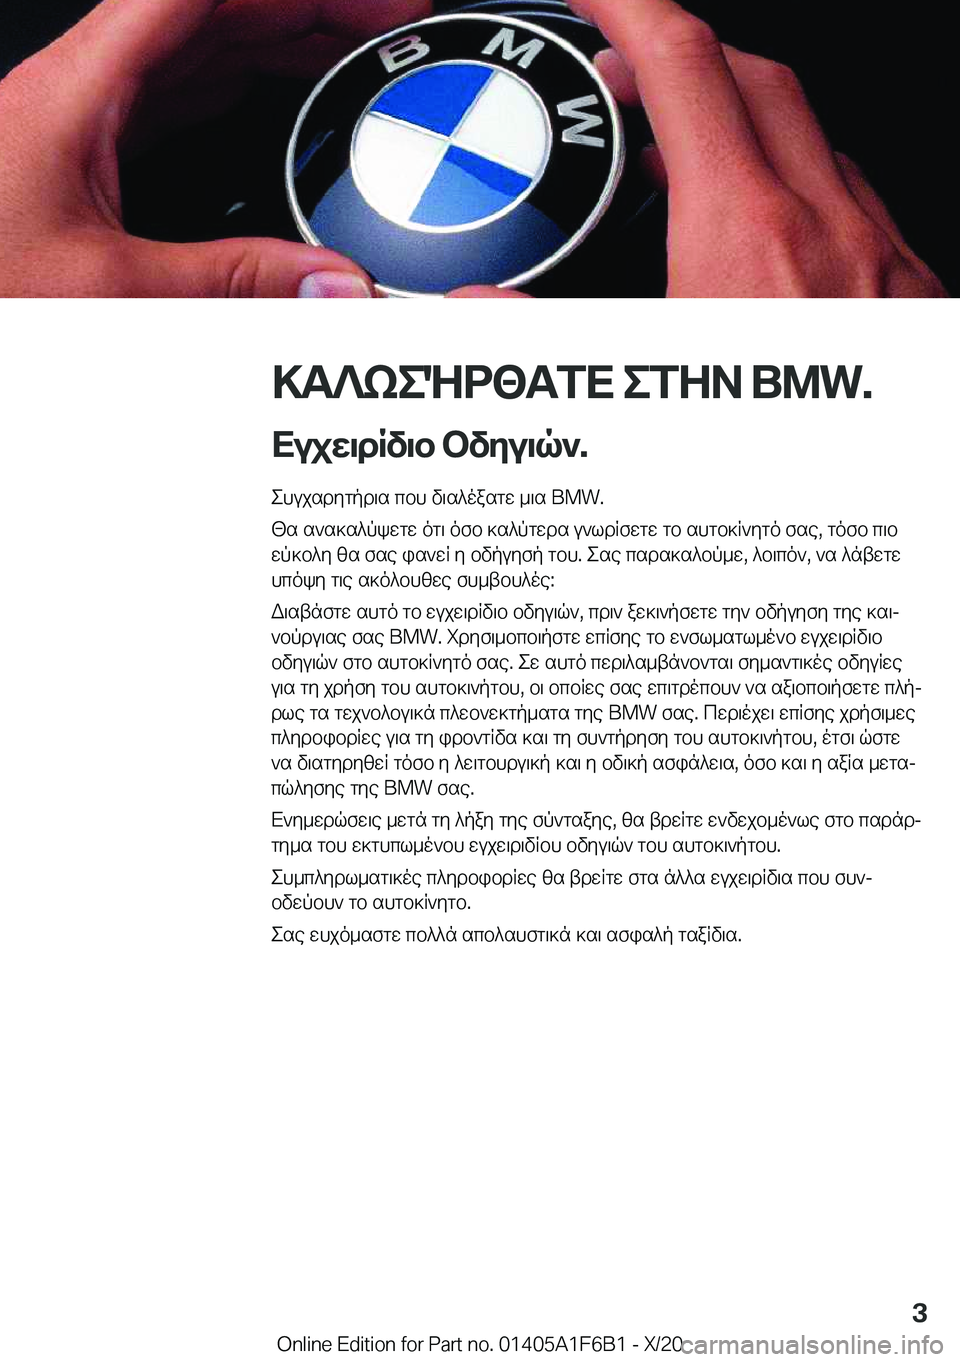 BMW X4 2021  ΟΔΗΓΌΣ ΧΡΉΣΗΣ (in Greek) >T?keNd<TfX�efZA��B�M�W�.
Xujw\dRv\b�bvyu\q`�. ehujsdygpd\s�cbh�v\s^oasgw�_\s��B�M�W�.
<s�s`s]s^pkwgw�og\�ofb�